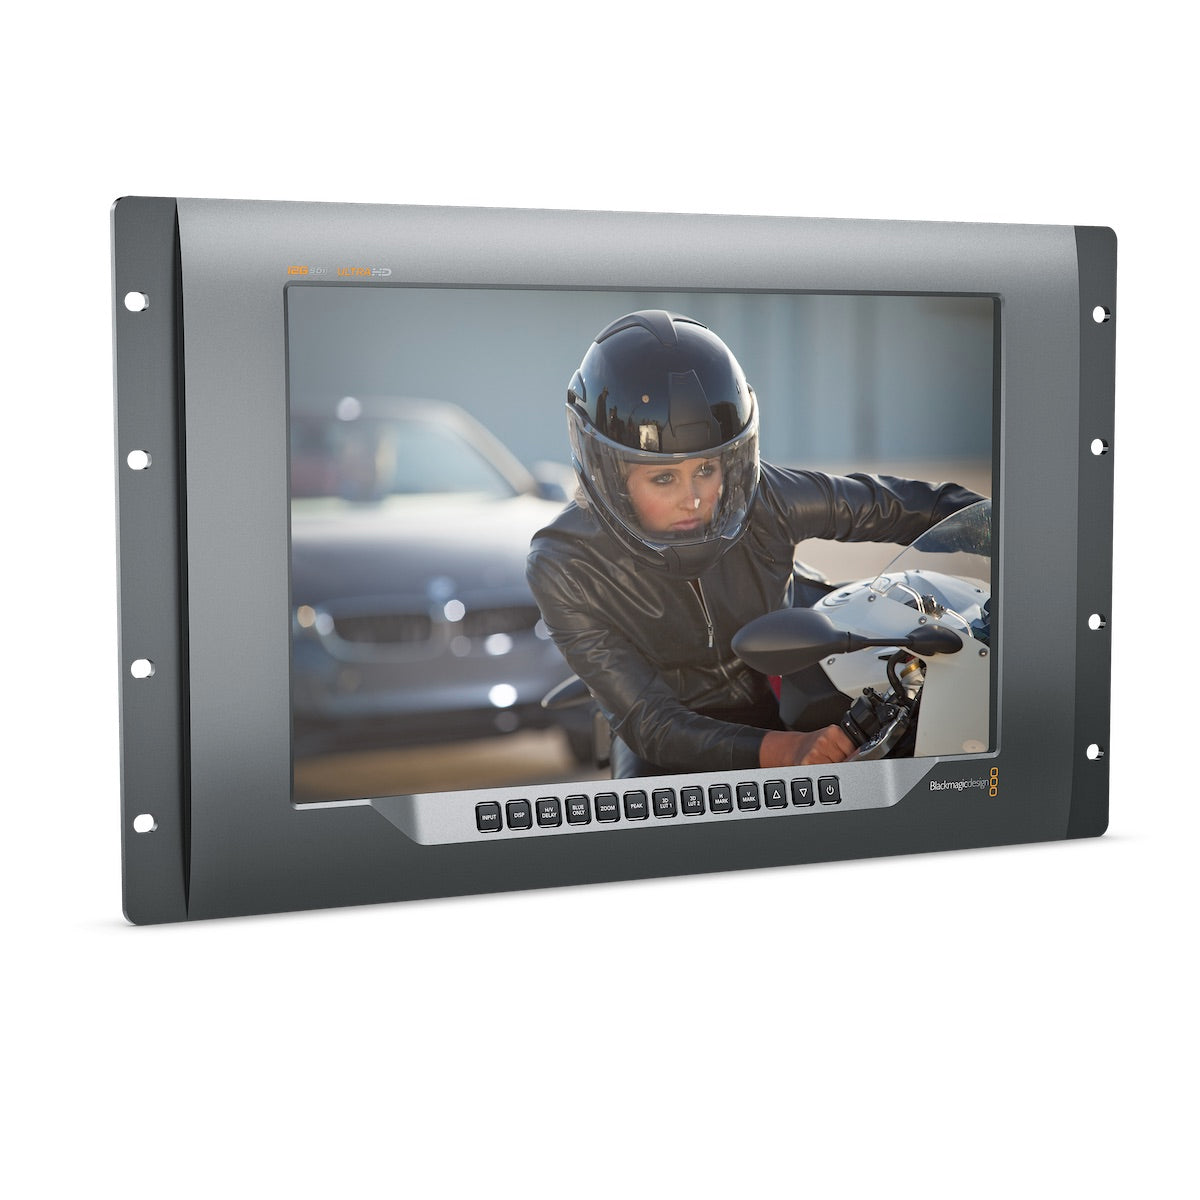 Blackmagic Design SmartView 4K - Ultra HD Broadcast Monitor